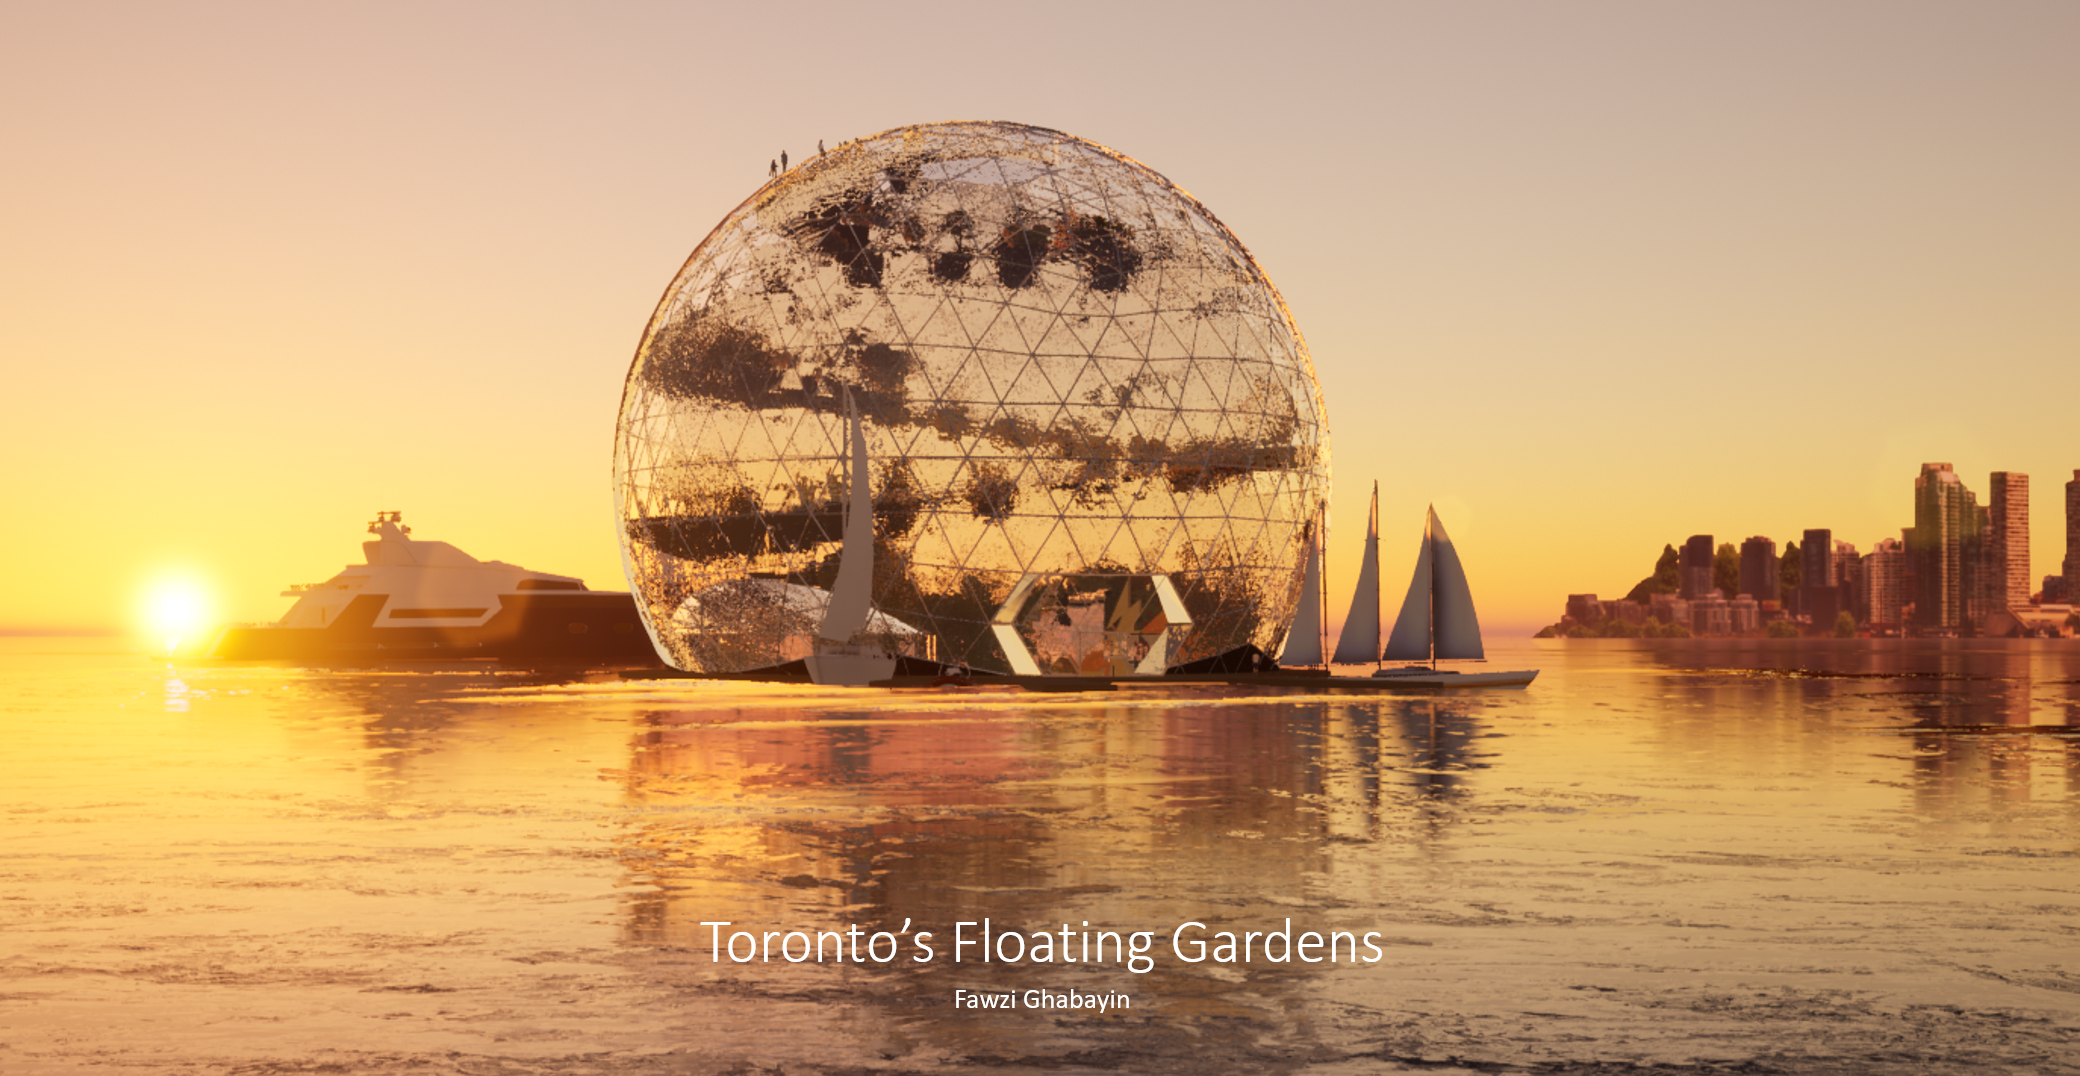 Toronto's Floating Gardens